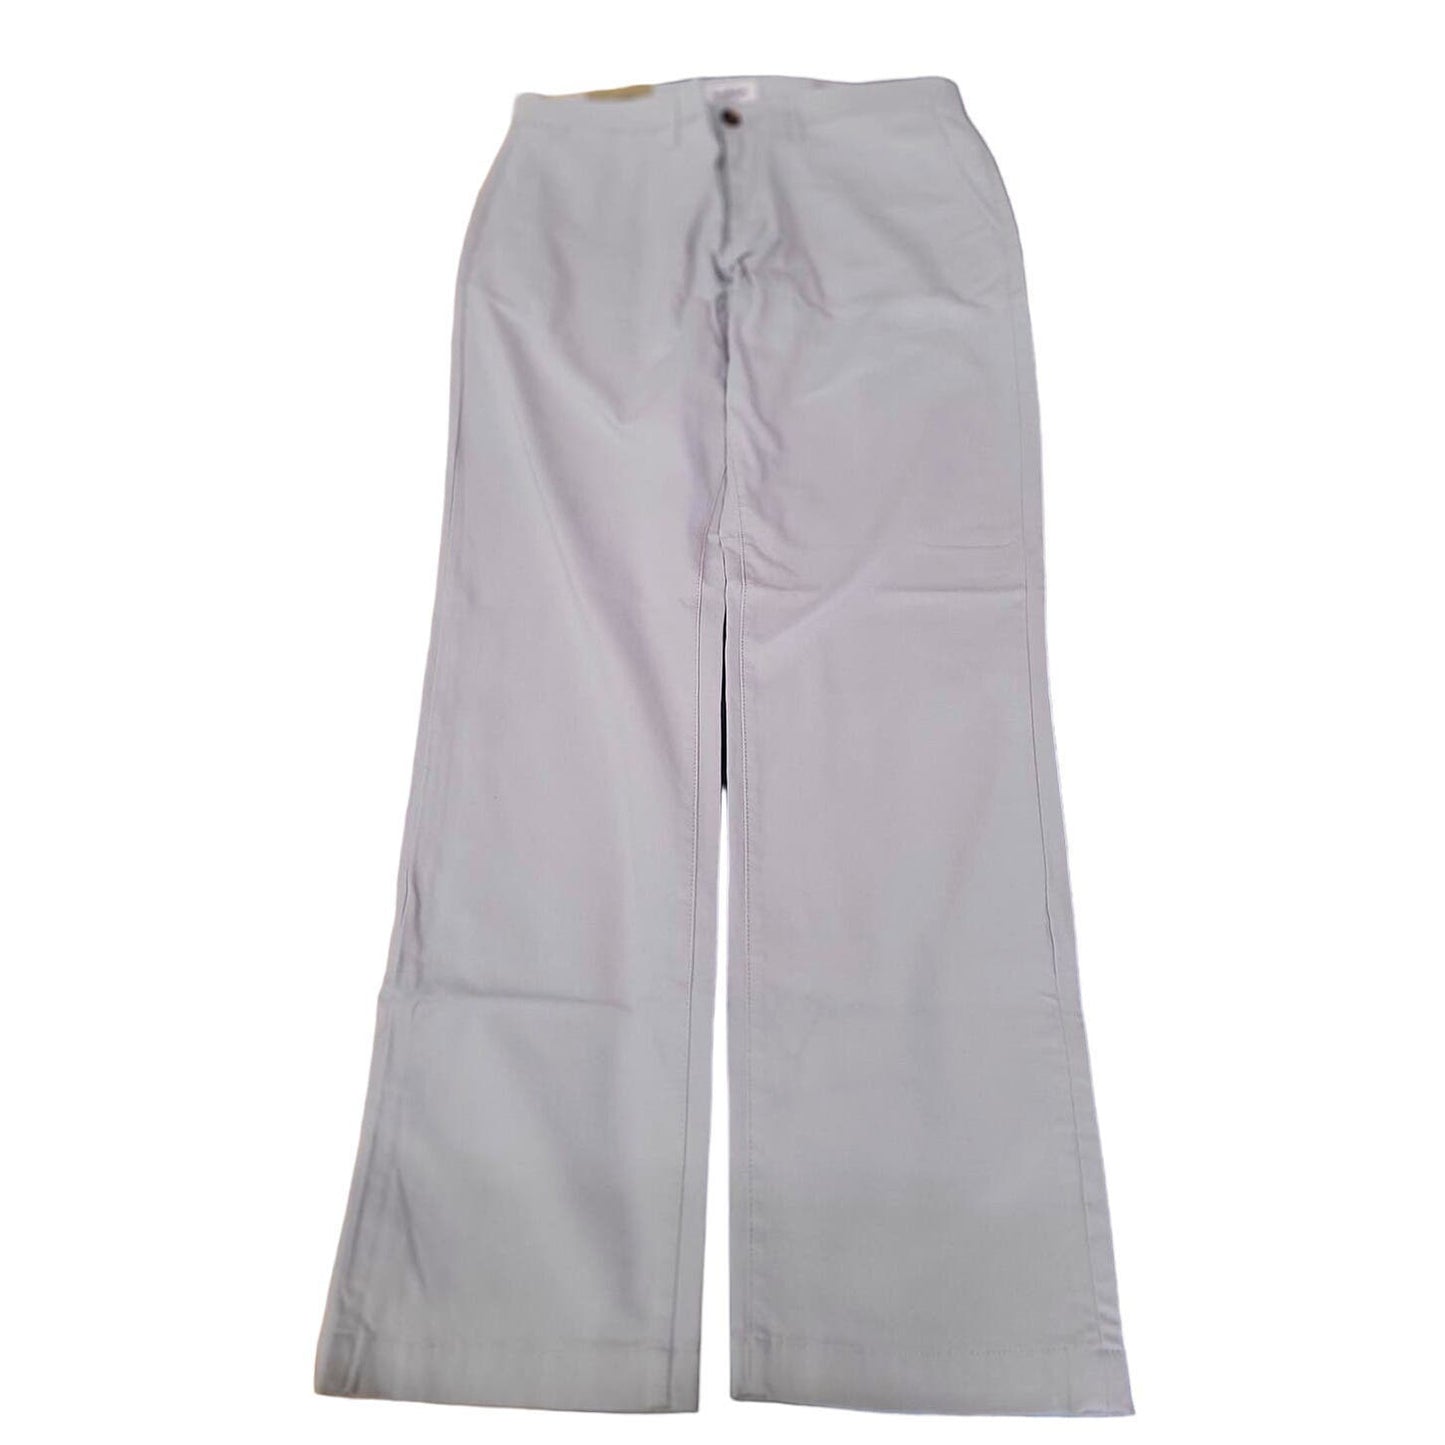 Men's Every Wear Athletic Fit Chino Pants - Goodfellow & Co. 34X32. Masonry Gray